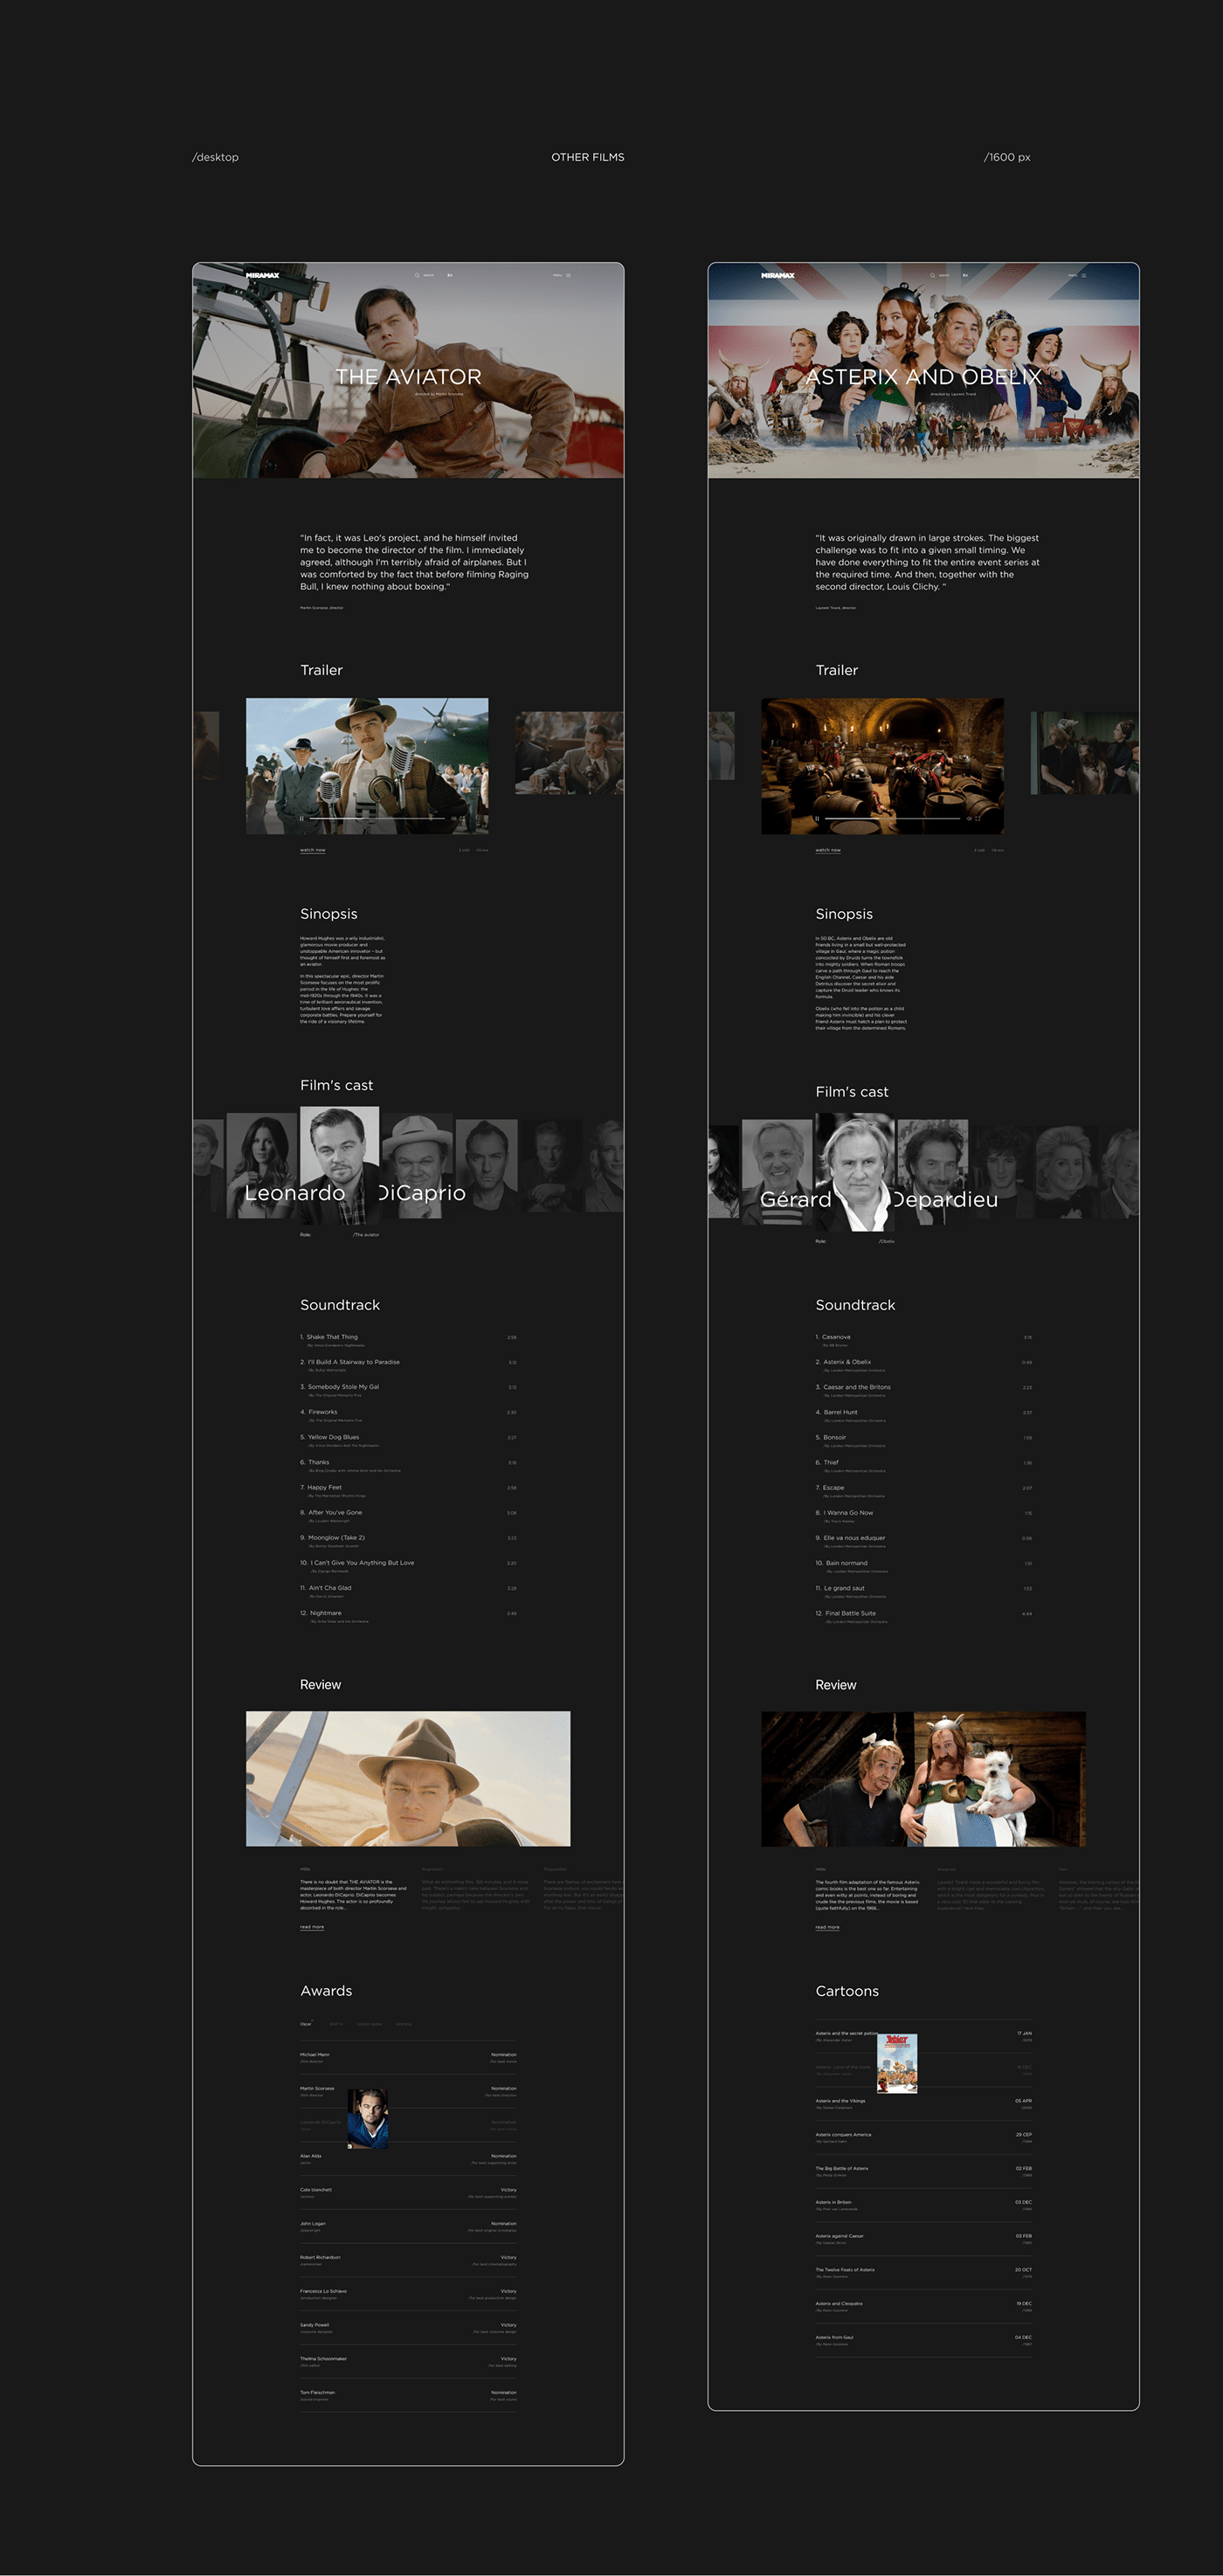 Miramax redesign concept site uprock uprock.school web-design Website films